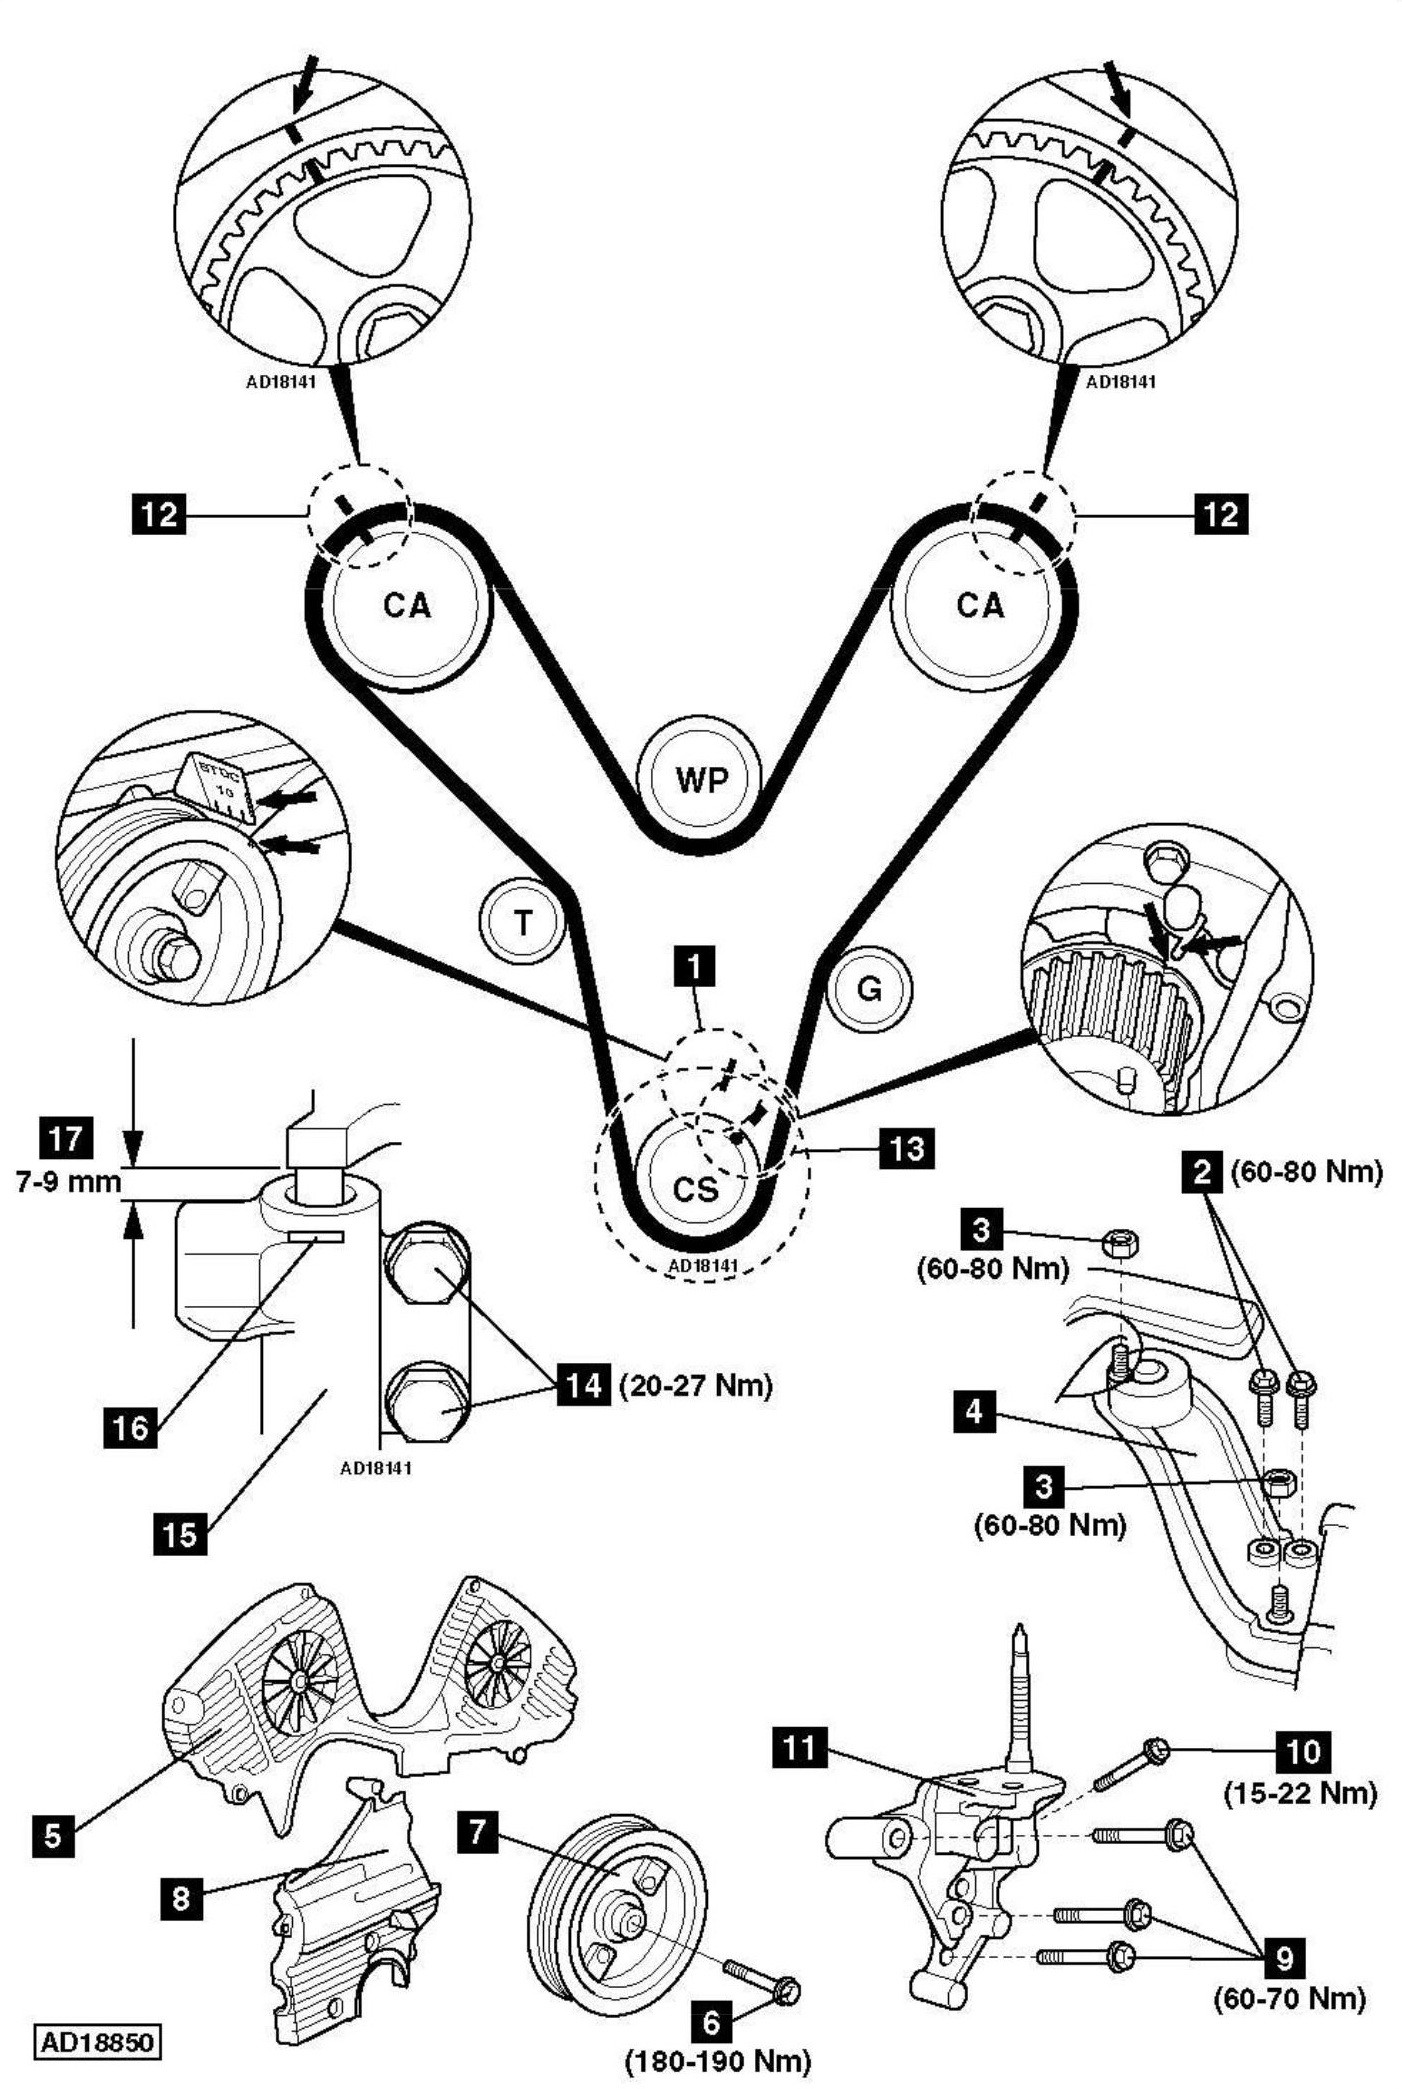 2005 Hyundai Elantra Engine Diagram 9c81f4a Hyundai Timing Belt Of 2005 Hyundai Elantra Engine Diagram